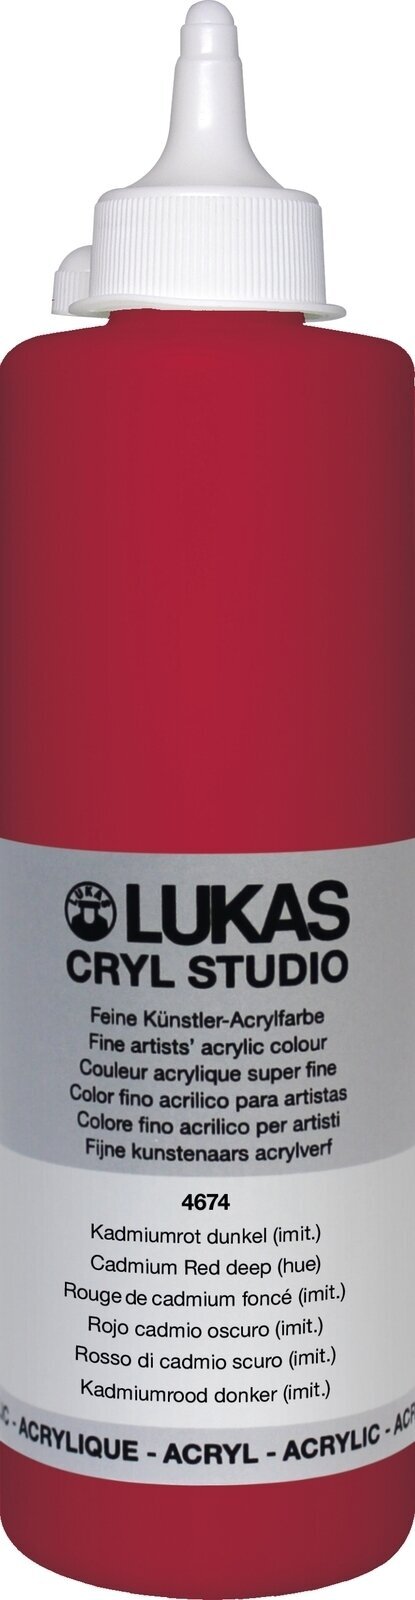 Colore acrilico Lukas Cryl Studio Acrylic Paint Plastic Bottle Colori acrilici Cadmium Red Deep Hue 500 ml 1 pz